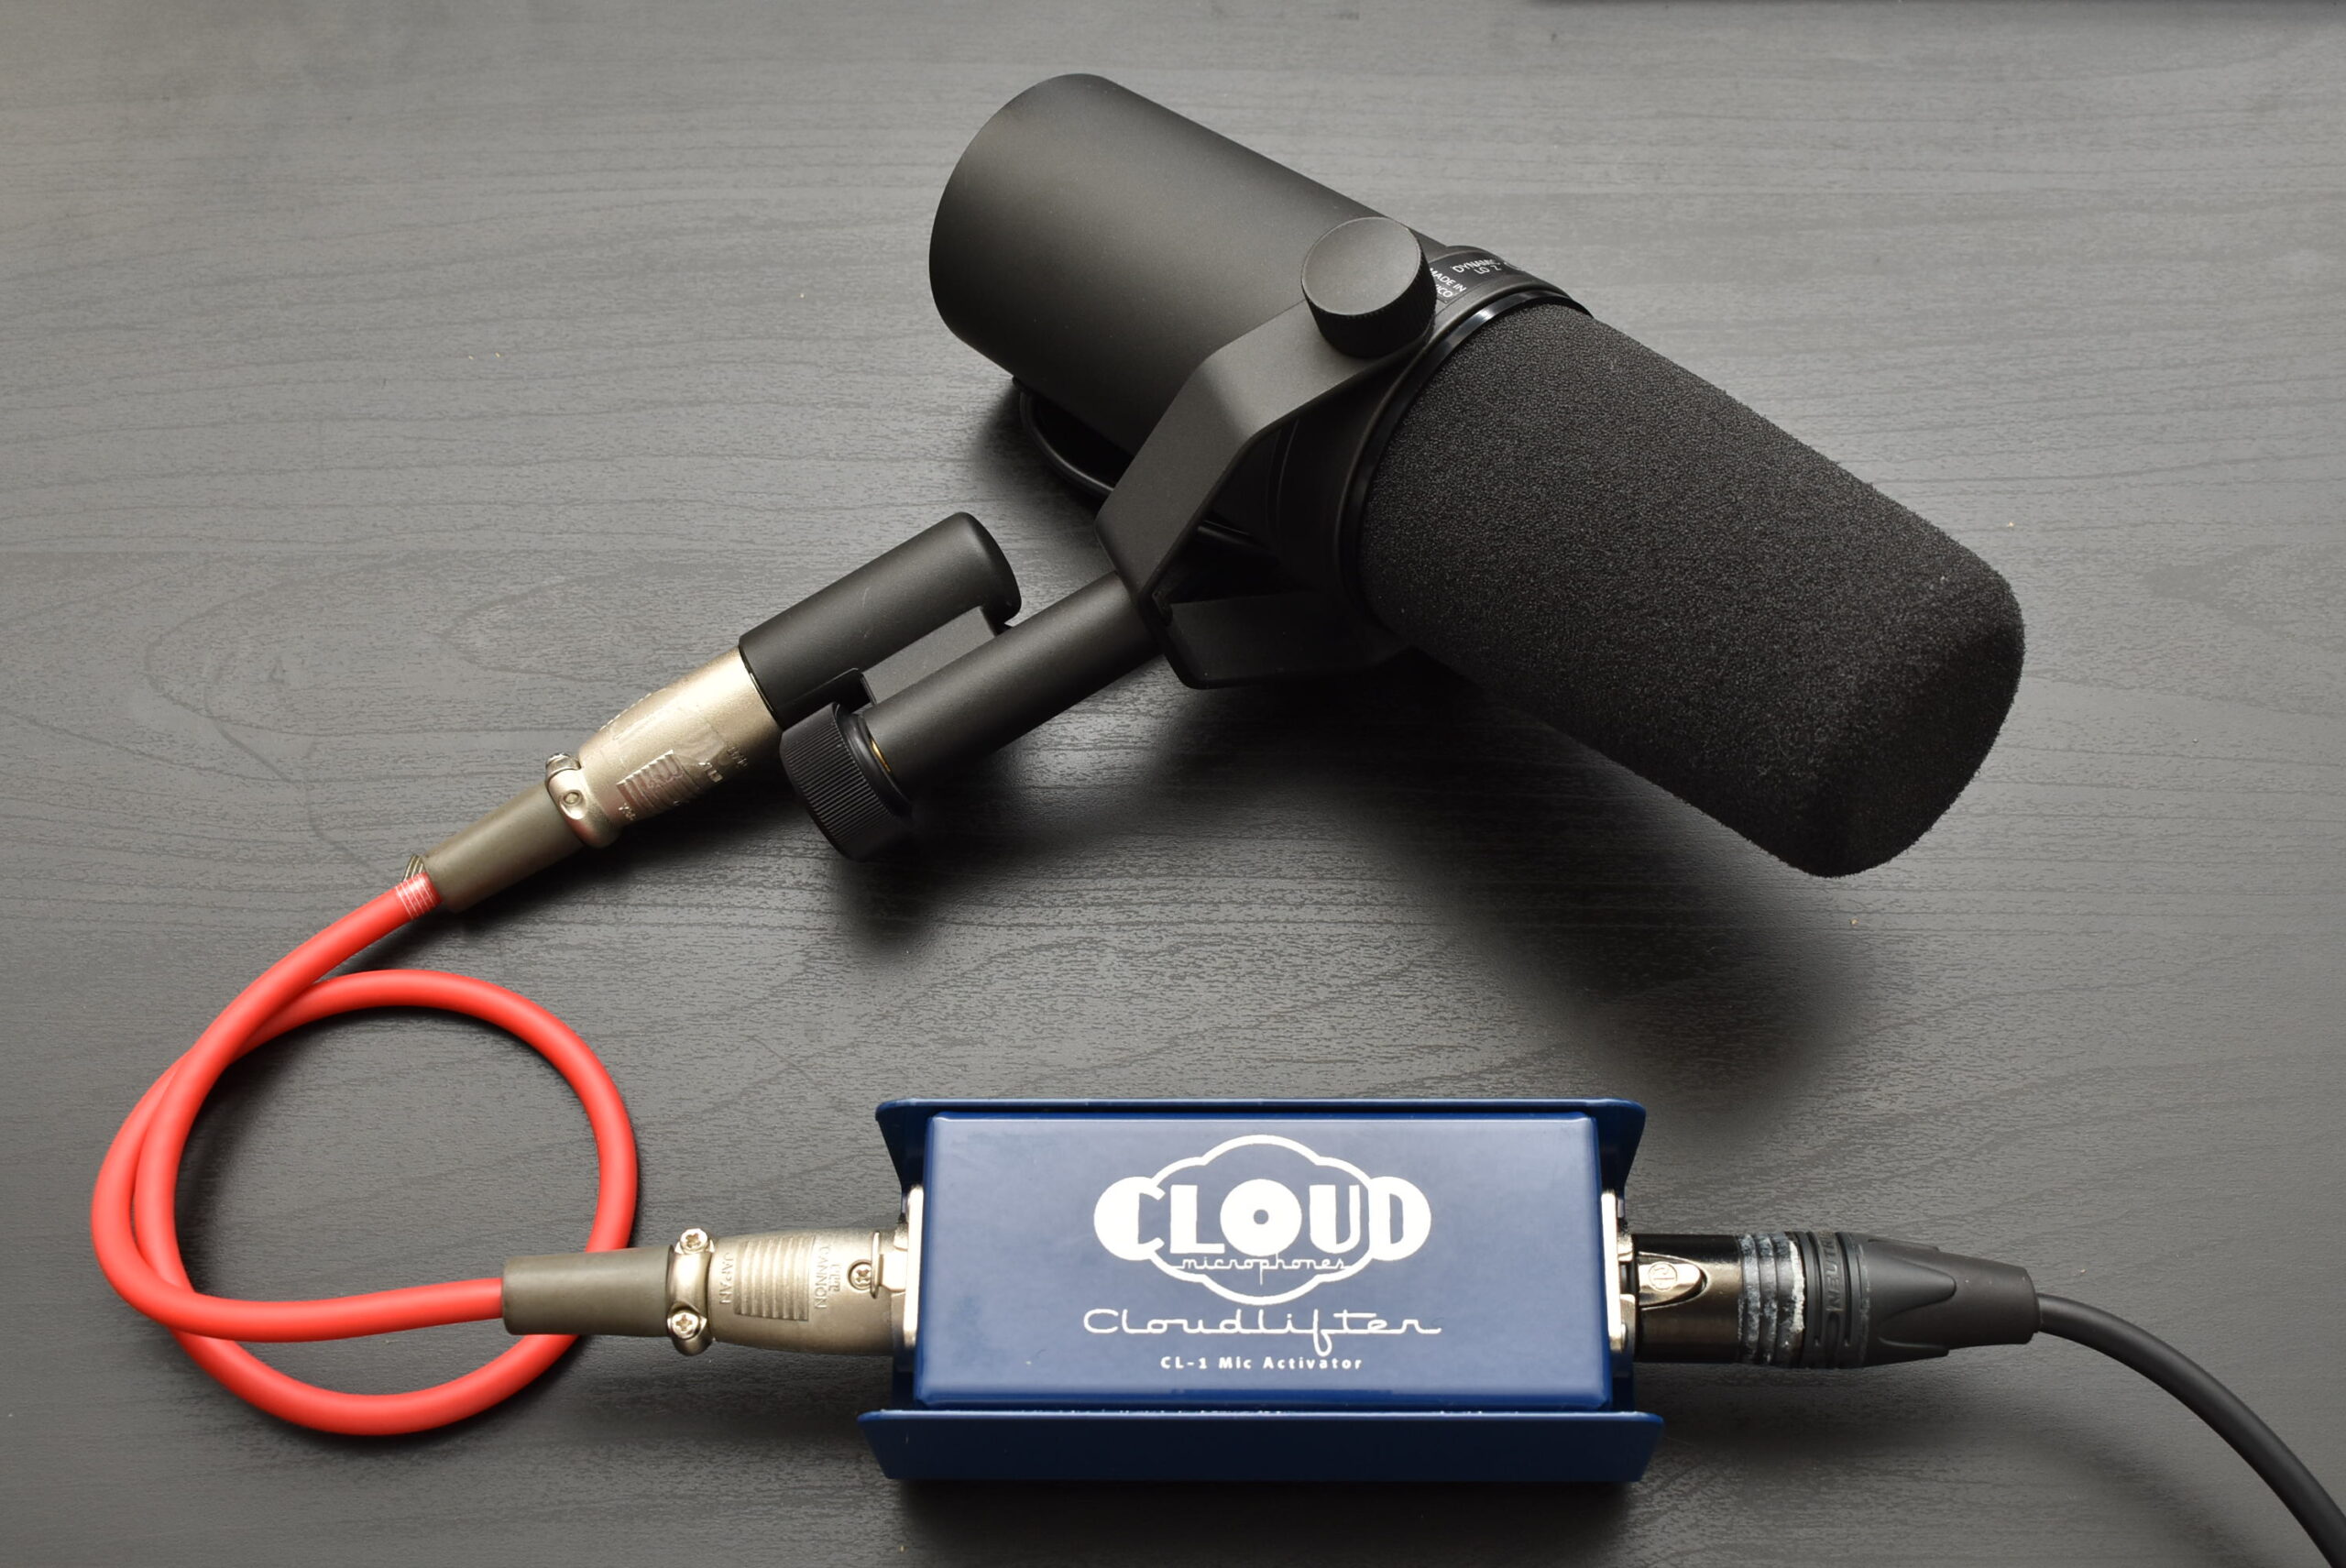 Cloudlifter CL-1 cloud microphones